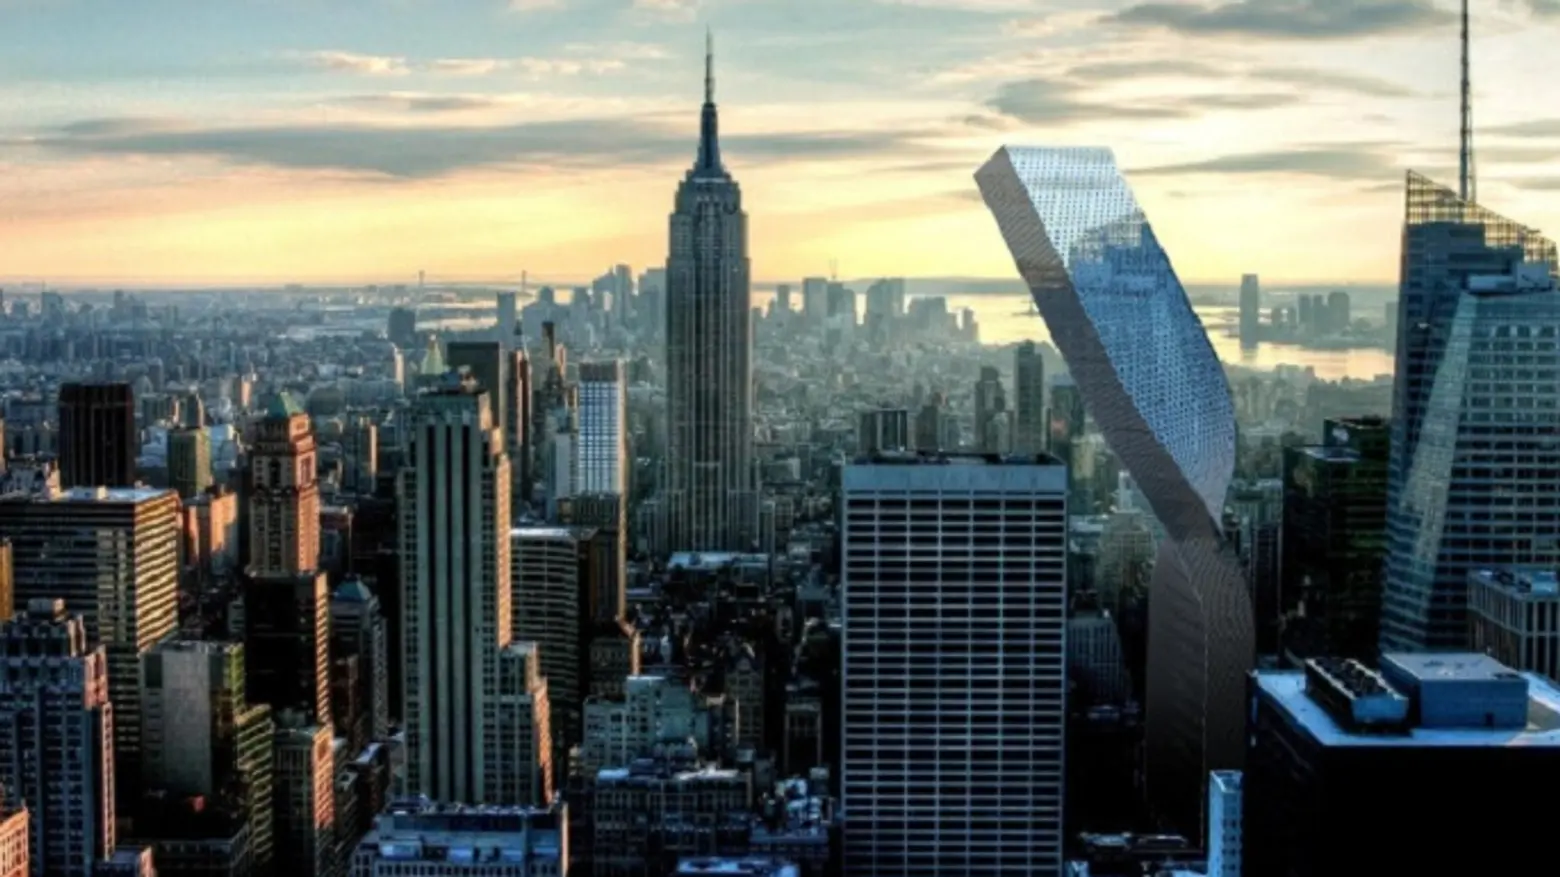 Paolo Venturella, Flex Tower, NYC architecture ideas, photovoltaic panels